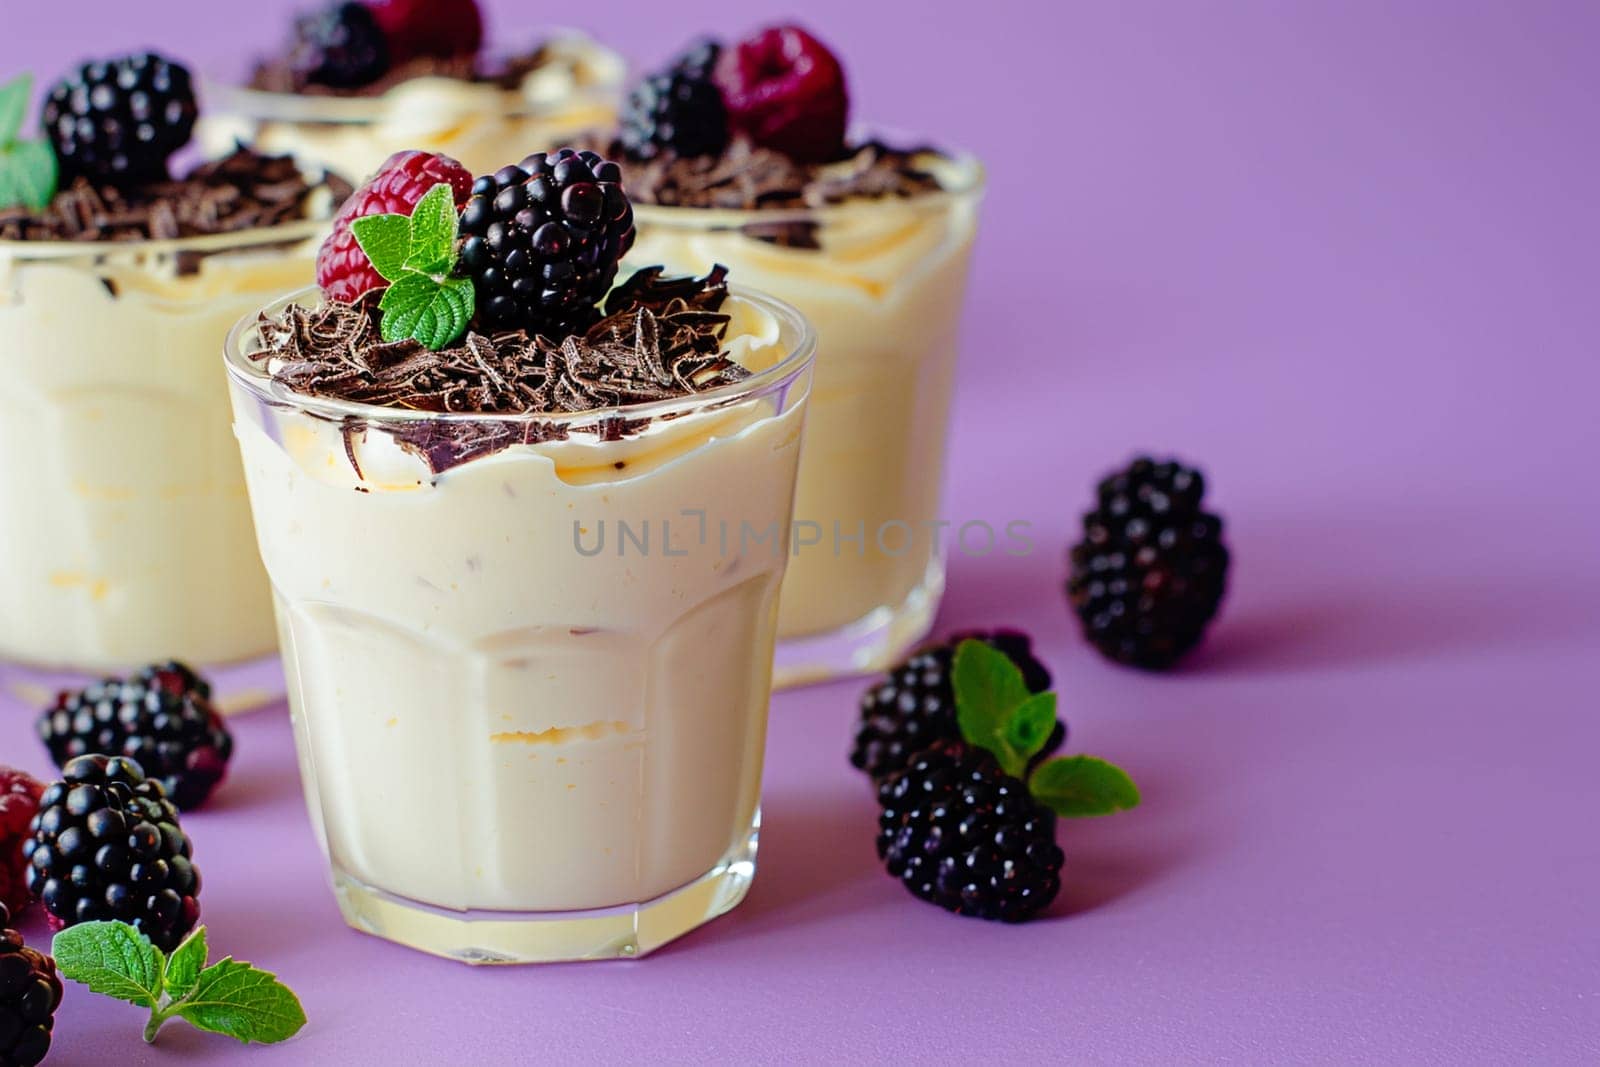 Elegant dessert presentation, panna cotta cups topped with raspberries, blackberries, mint leaves, chocolate shavings on purple backdrop.